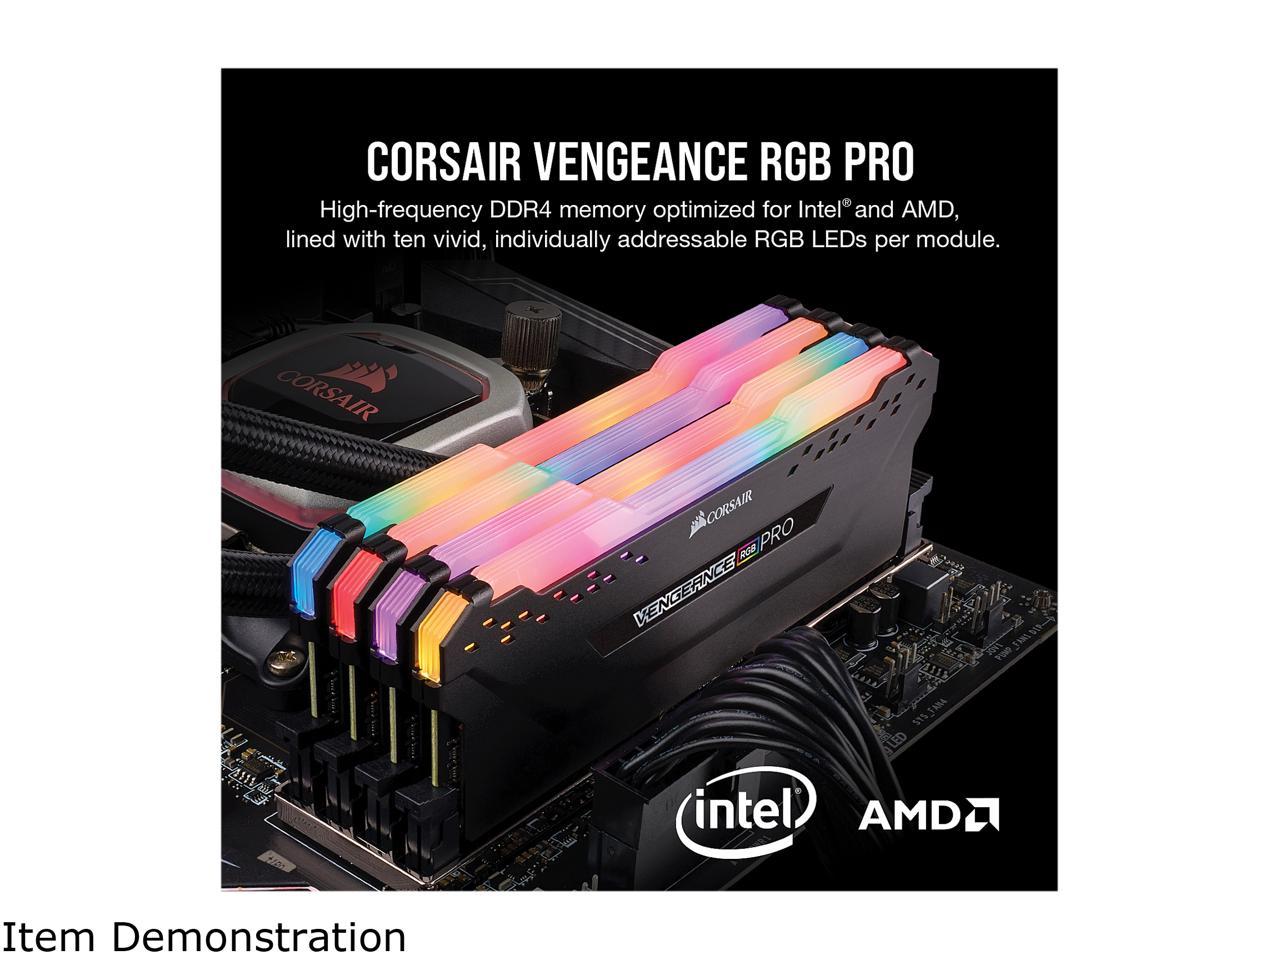 CORSAIR Vengeance RGB Pro 32GB (2 x 16GB) 288-Pin PC RAM DDR4 3600 (PC4 28800) Desktop Memory Model CMW32GX4M2D3600C18 **Open Box **